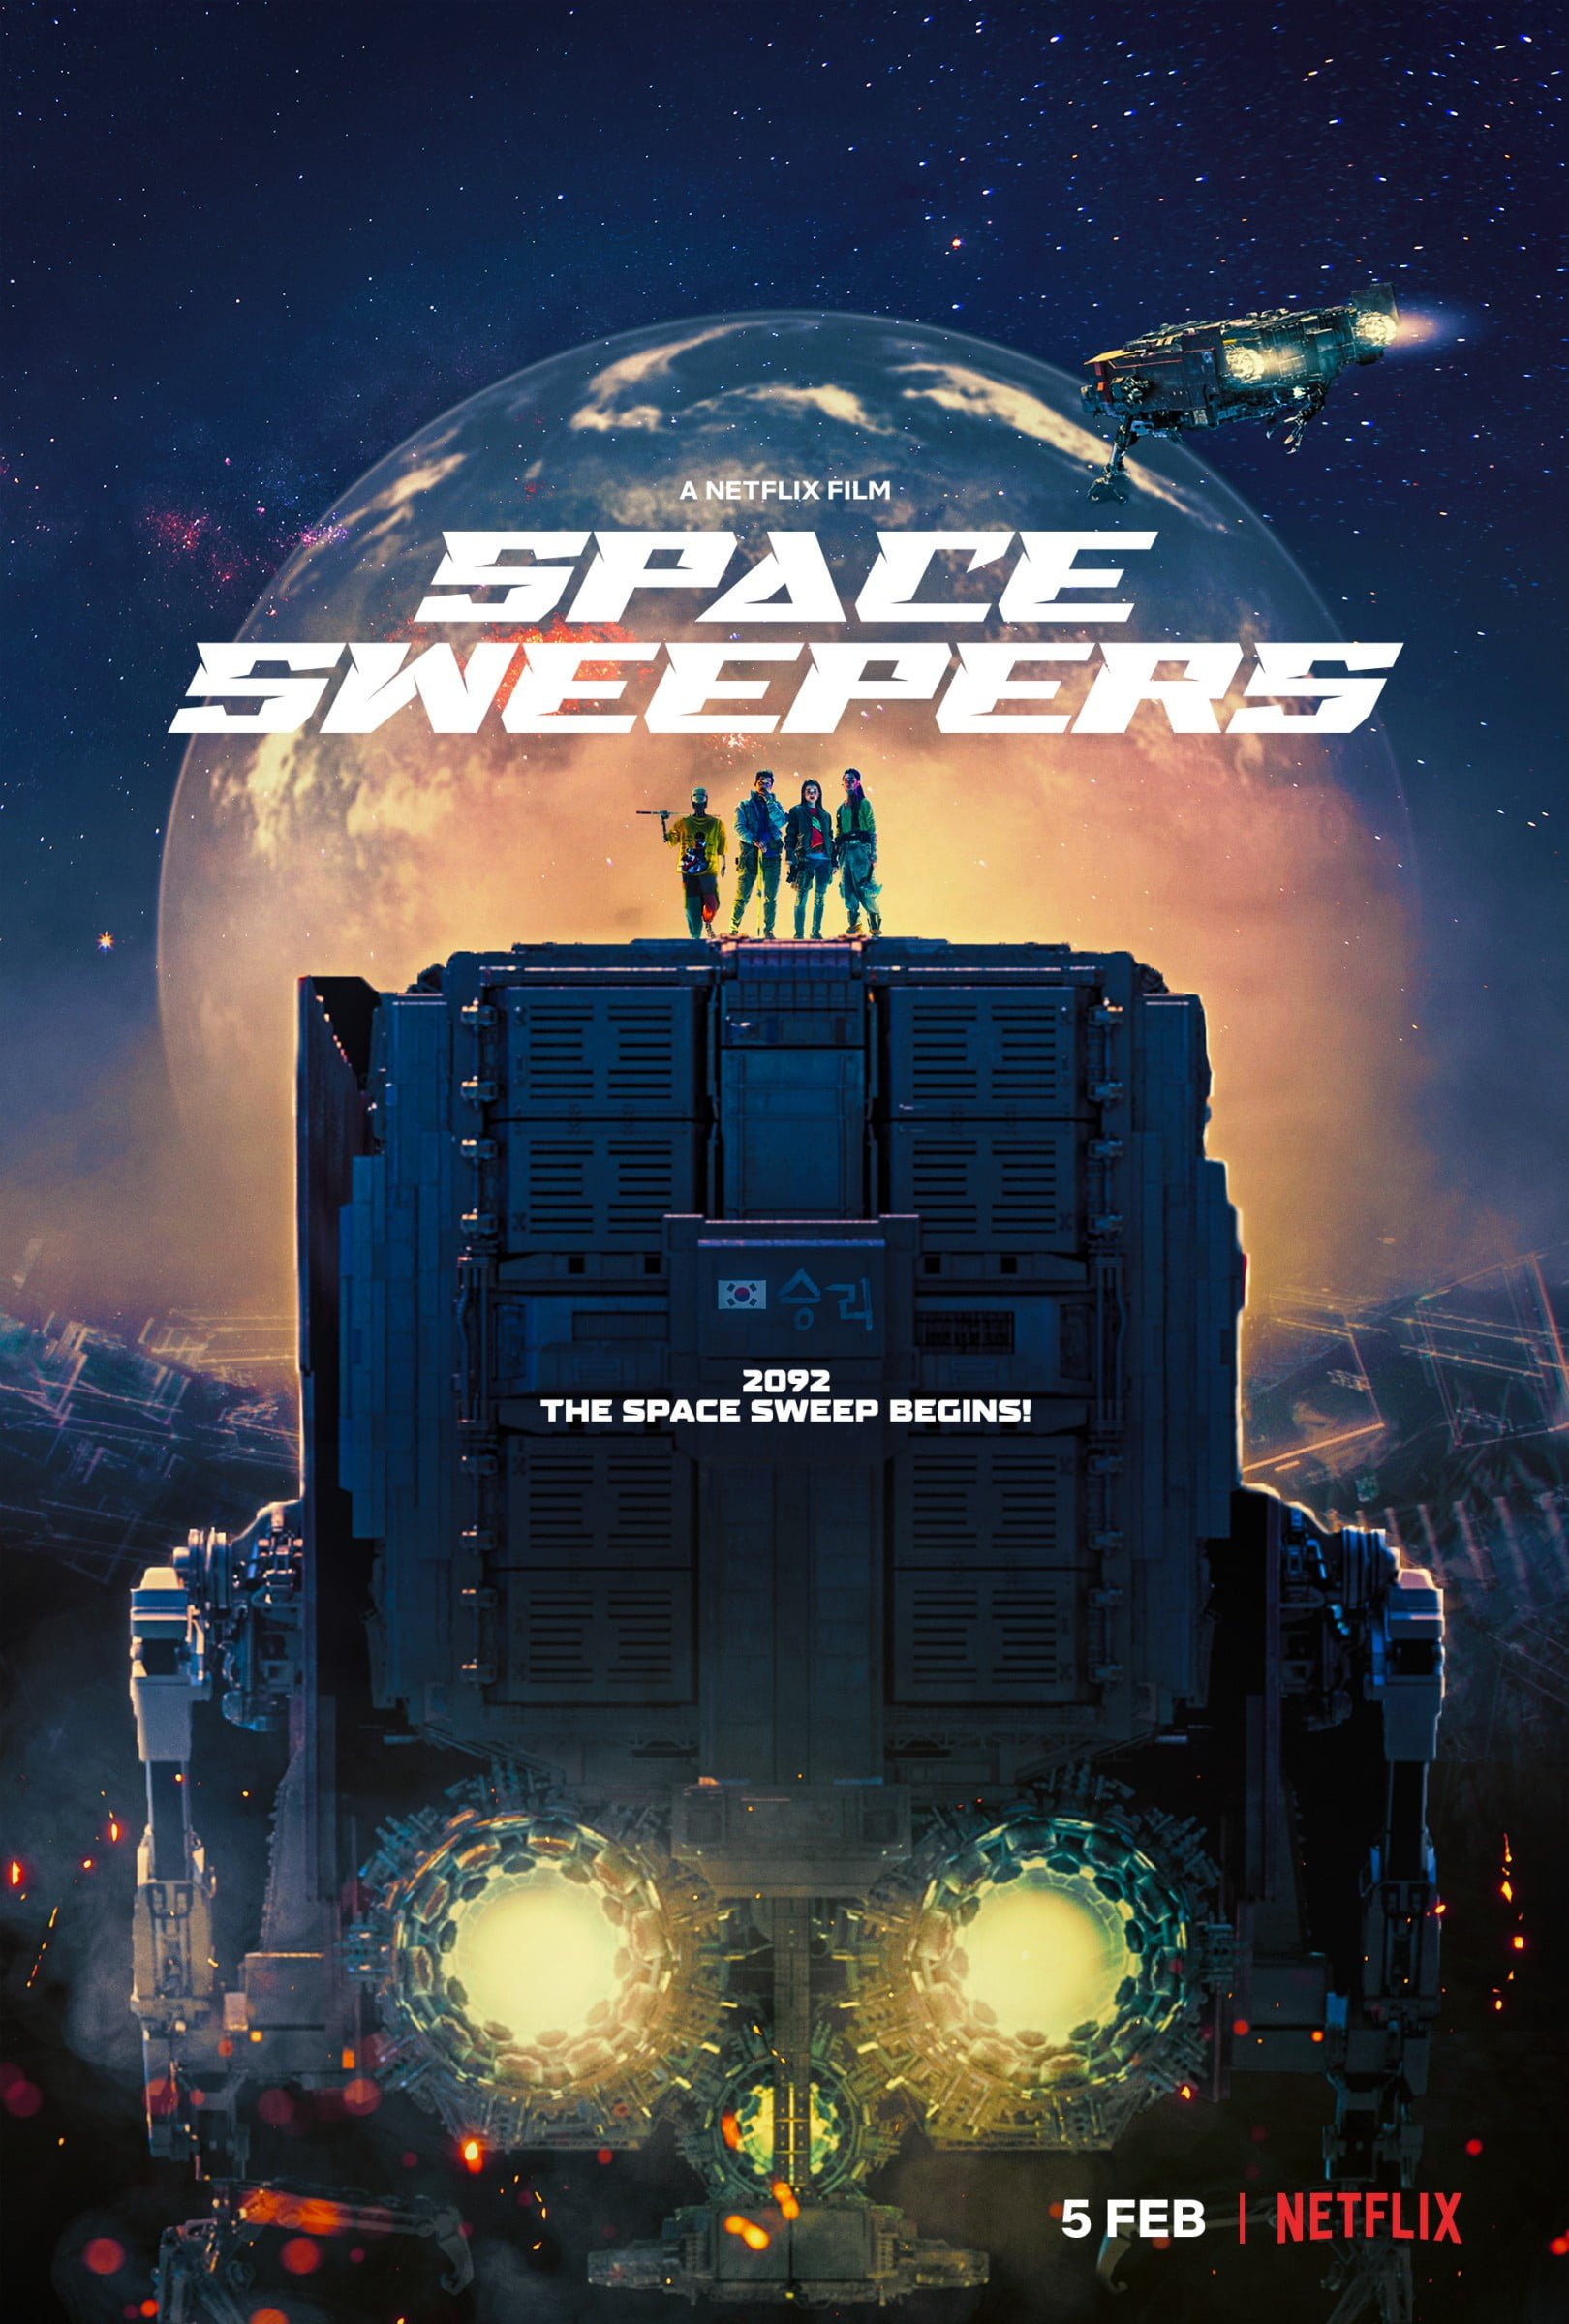 Netflix Film Space Sweepers, Starring Song Joong-Ki & Kim Tae-Ri, Confirmed For 5 February Release